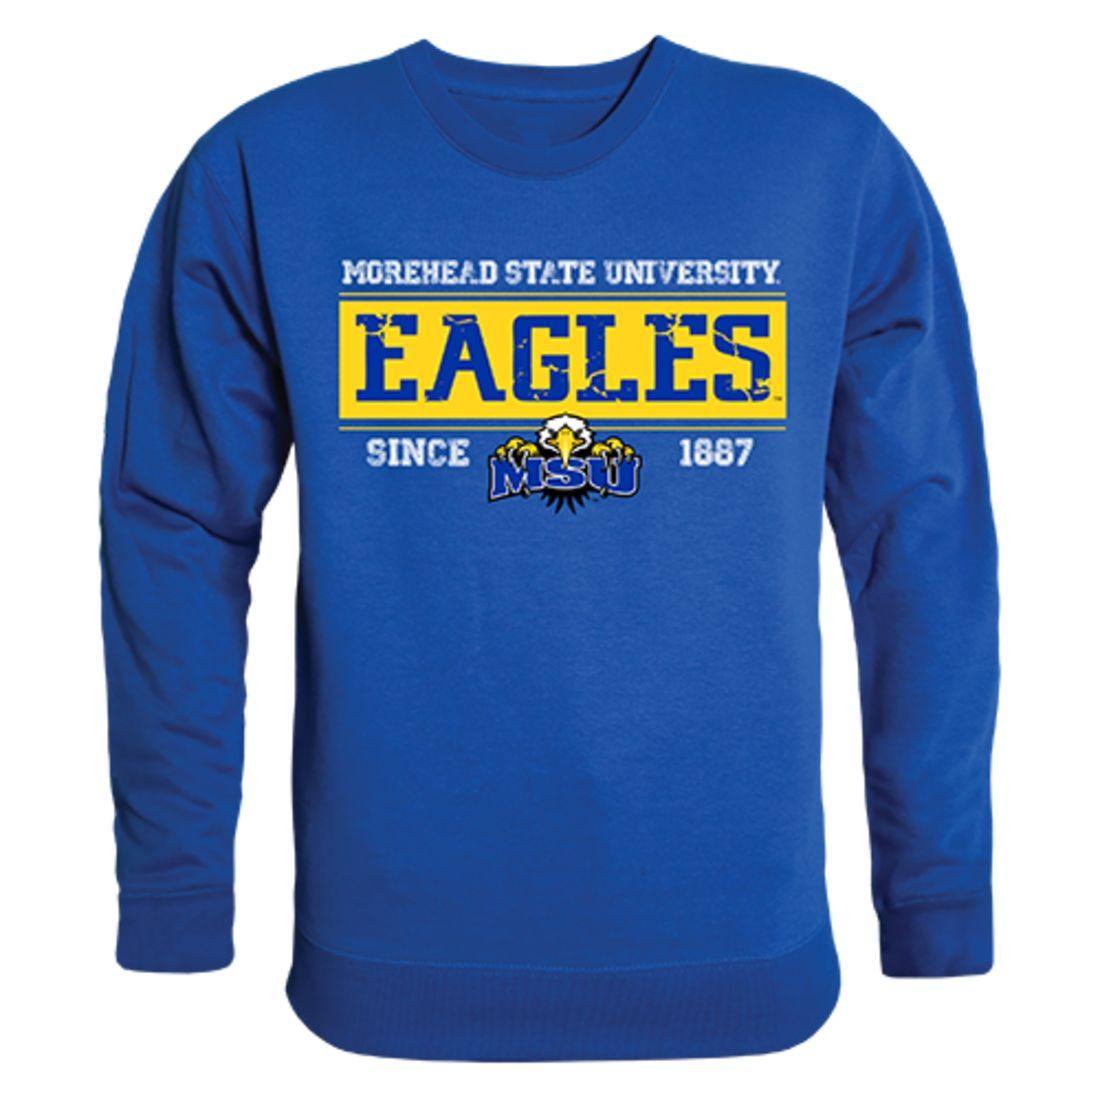 MSU Morehead State University Eagles Established Crewneck Pullover Sweatshirt Sweater Royal-Campus-Wardrobe